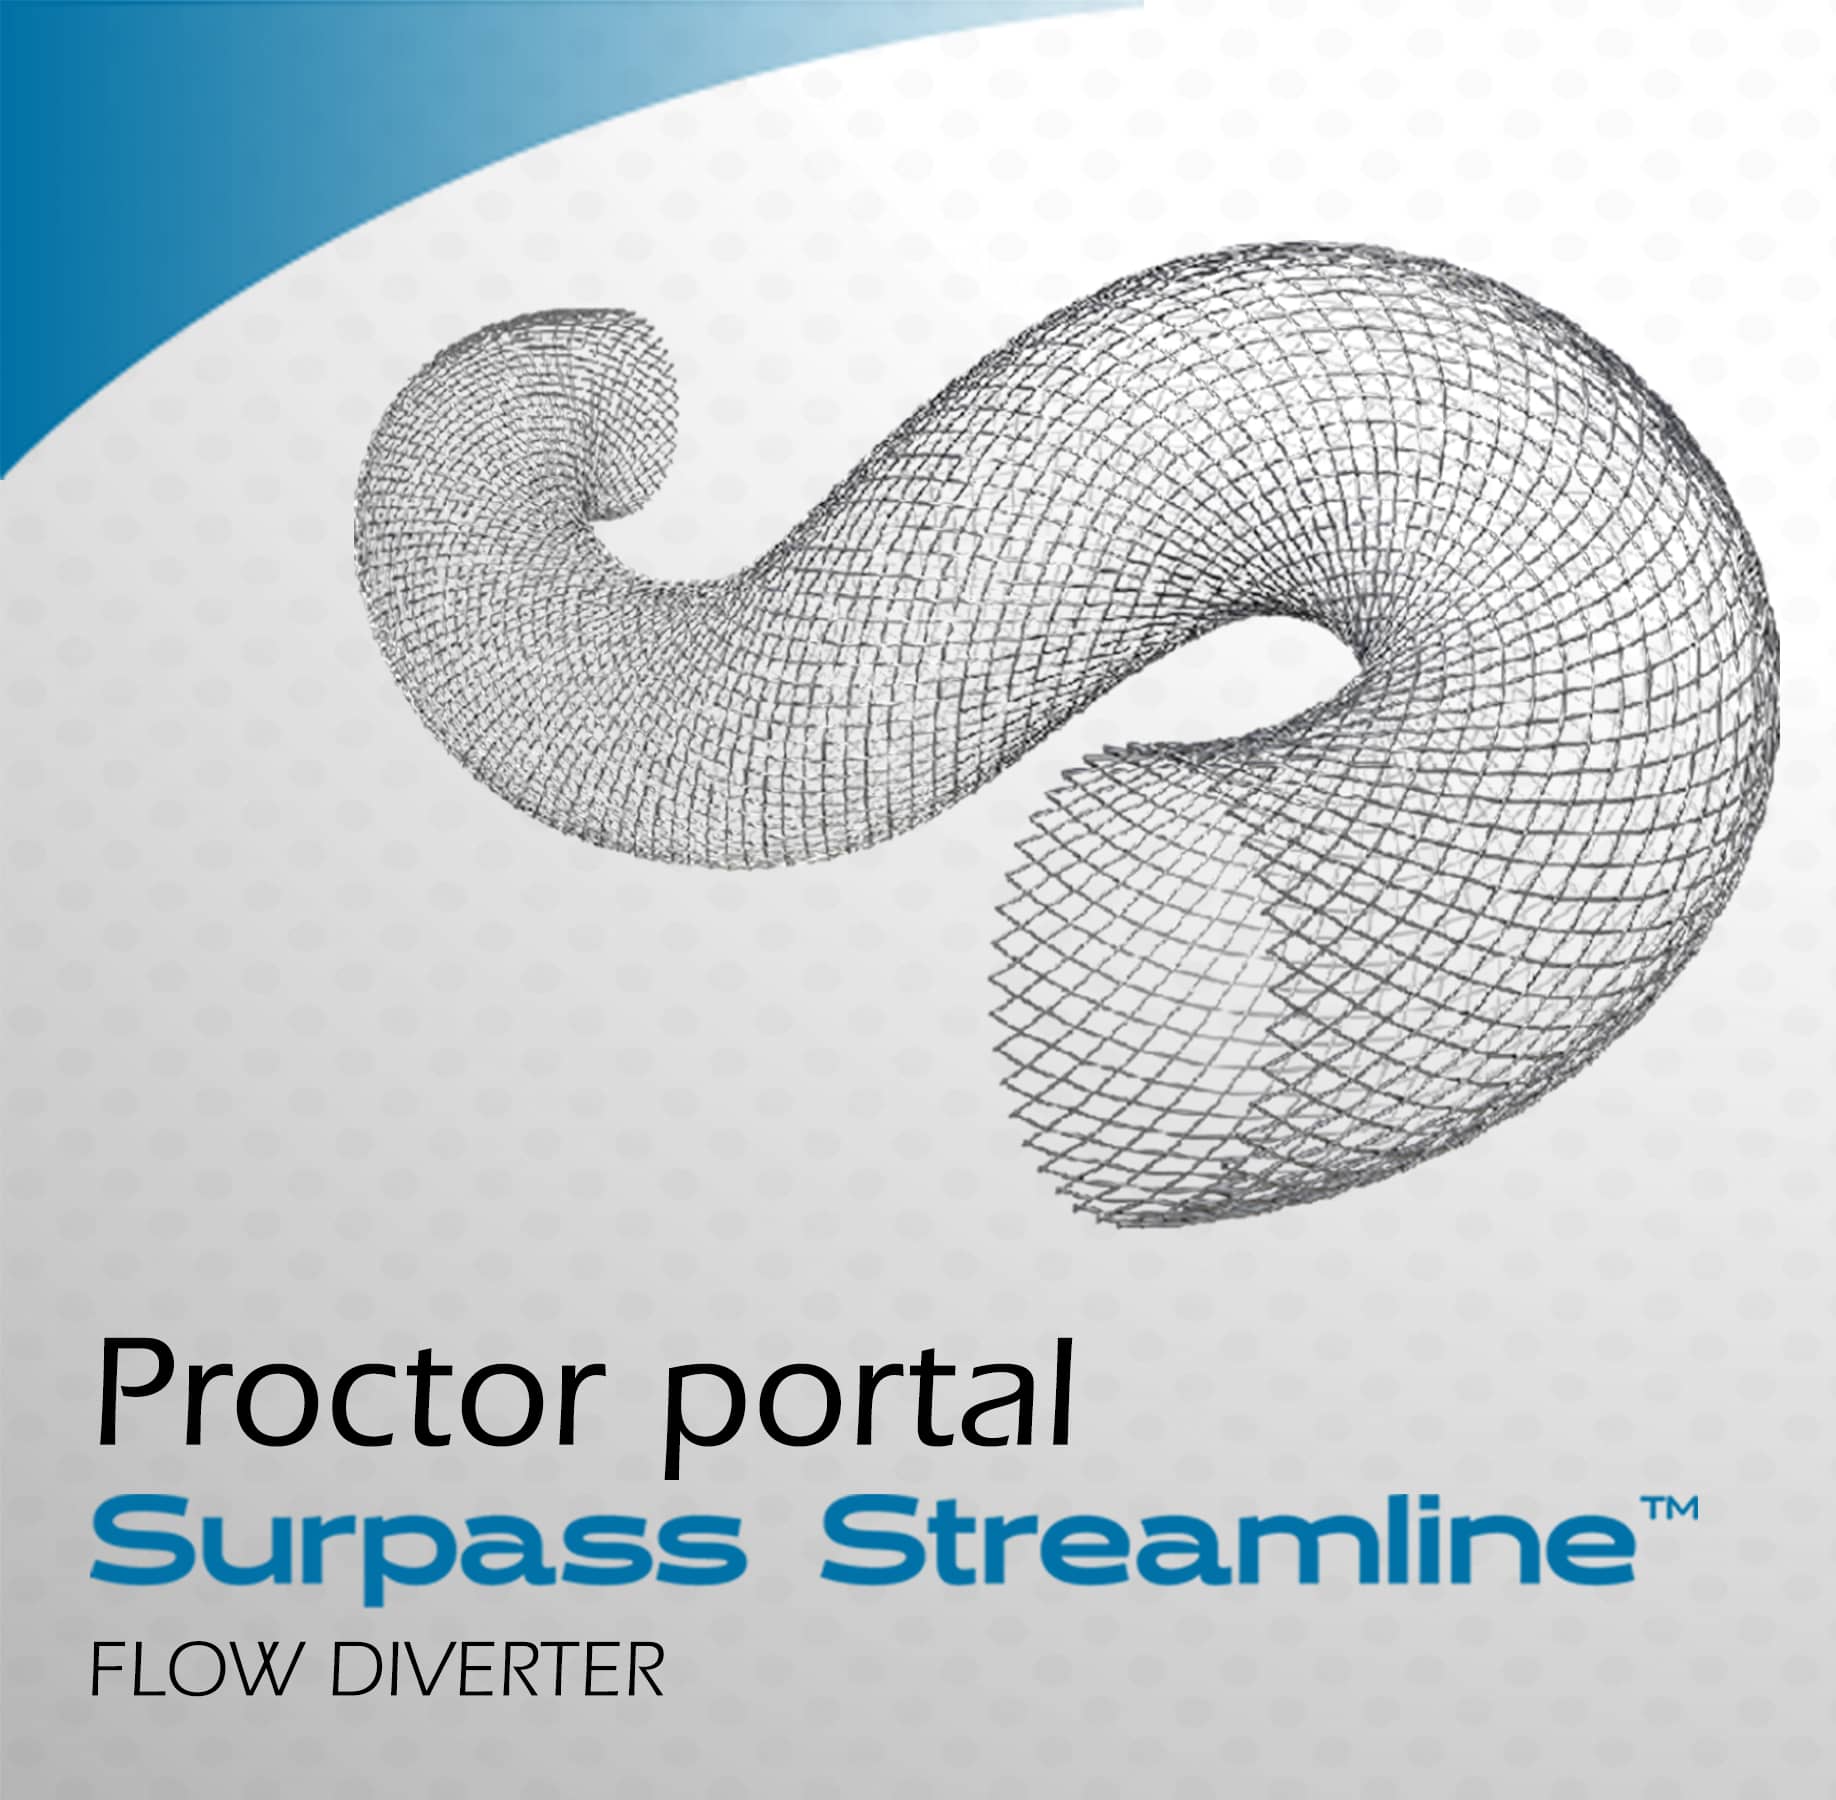 Proctor portal Image